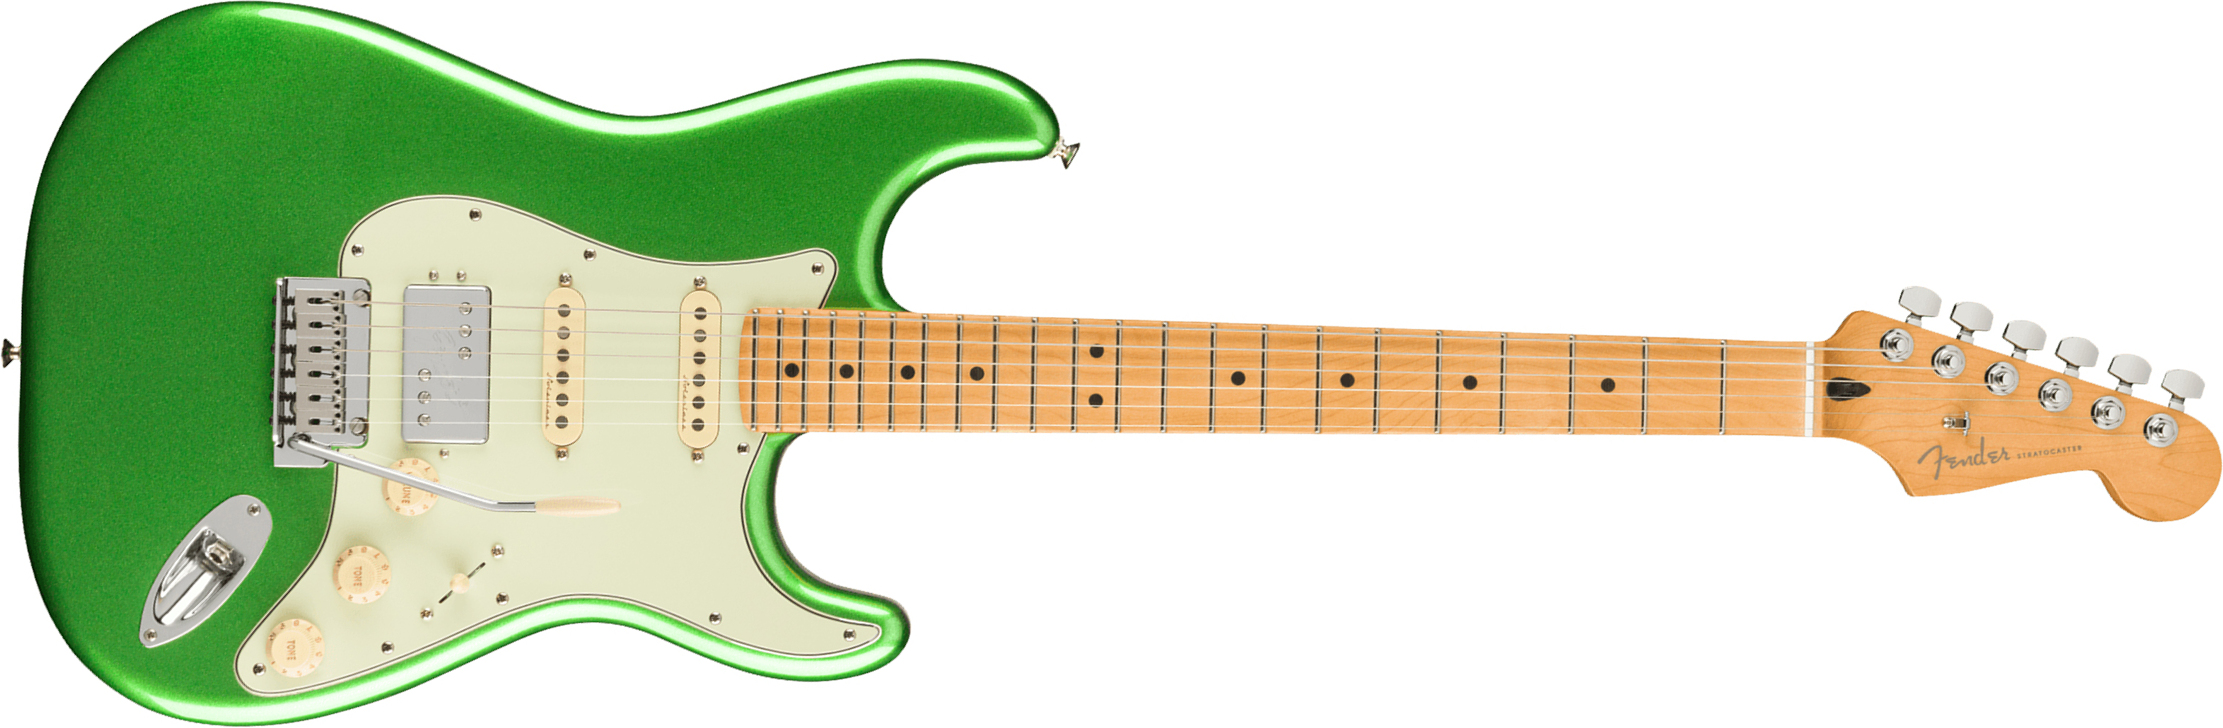 Fender Strat Player Plus Mex Hss Trem Mn - Cosmic Jade - Guitarra eléctrica con forma de str. - Main picture